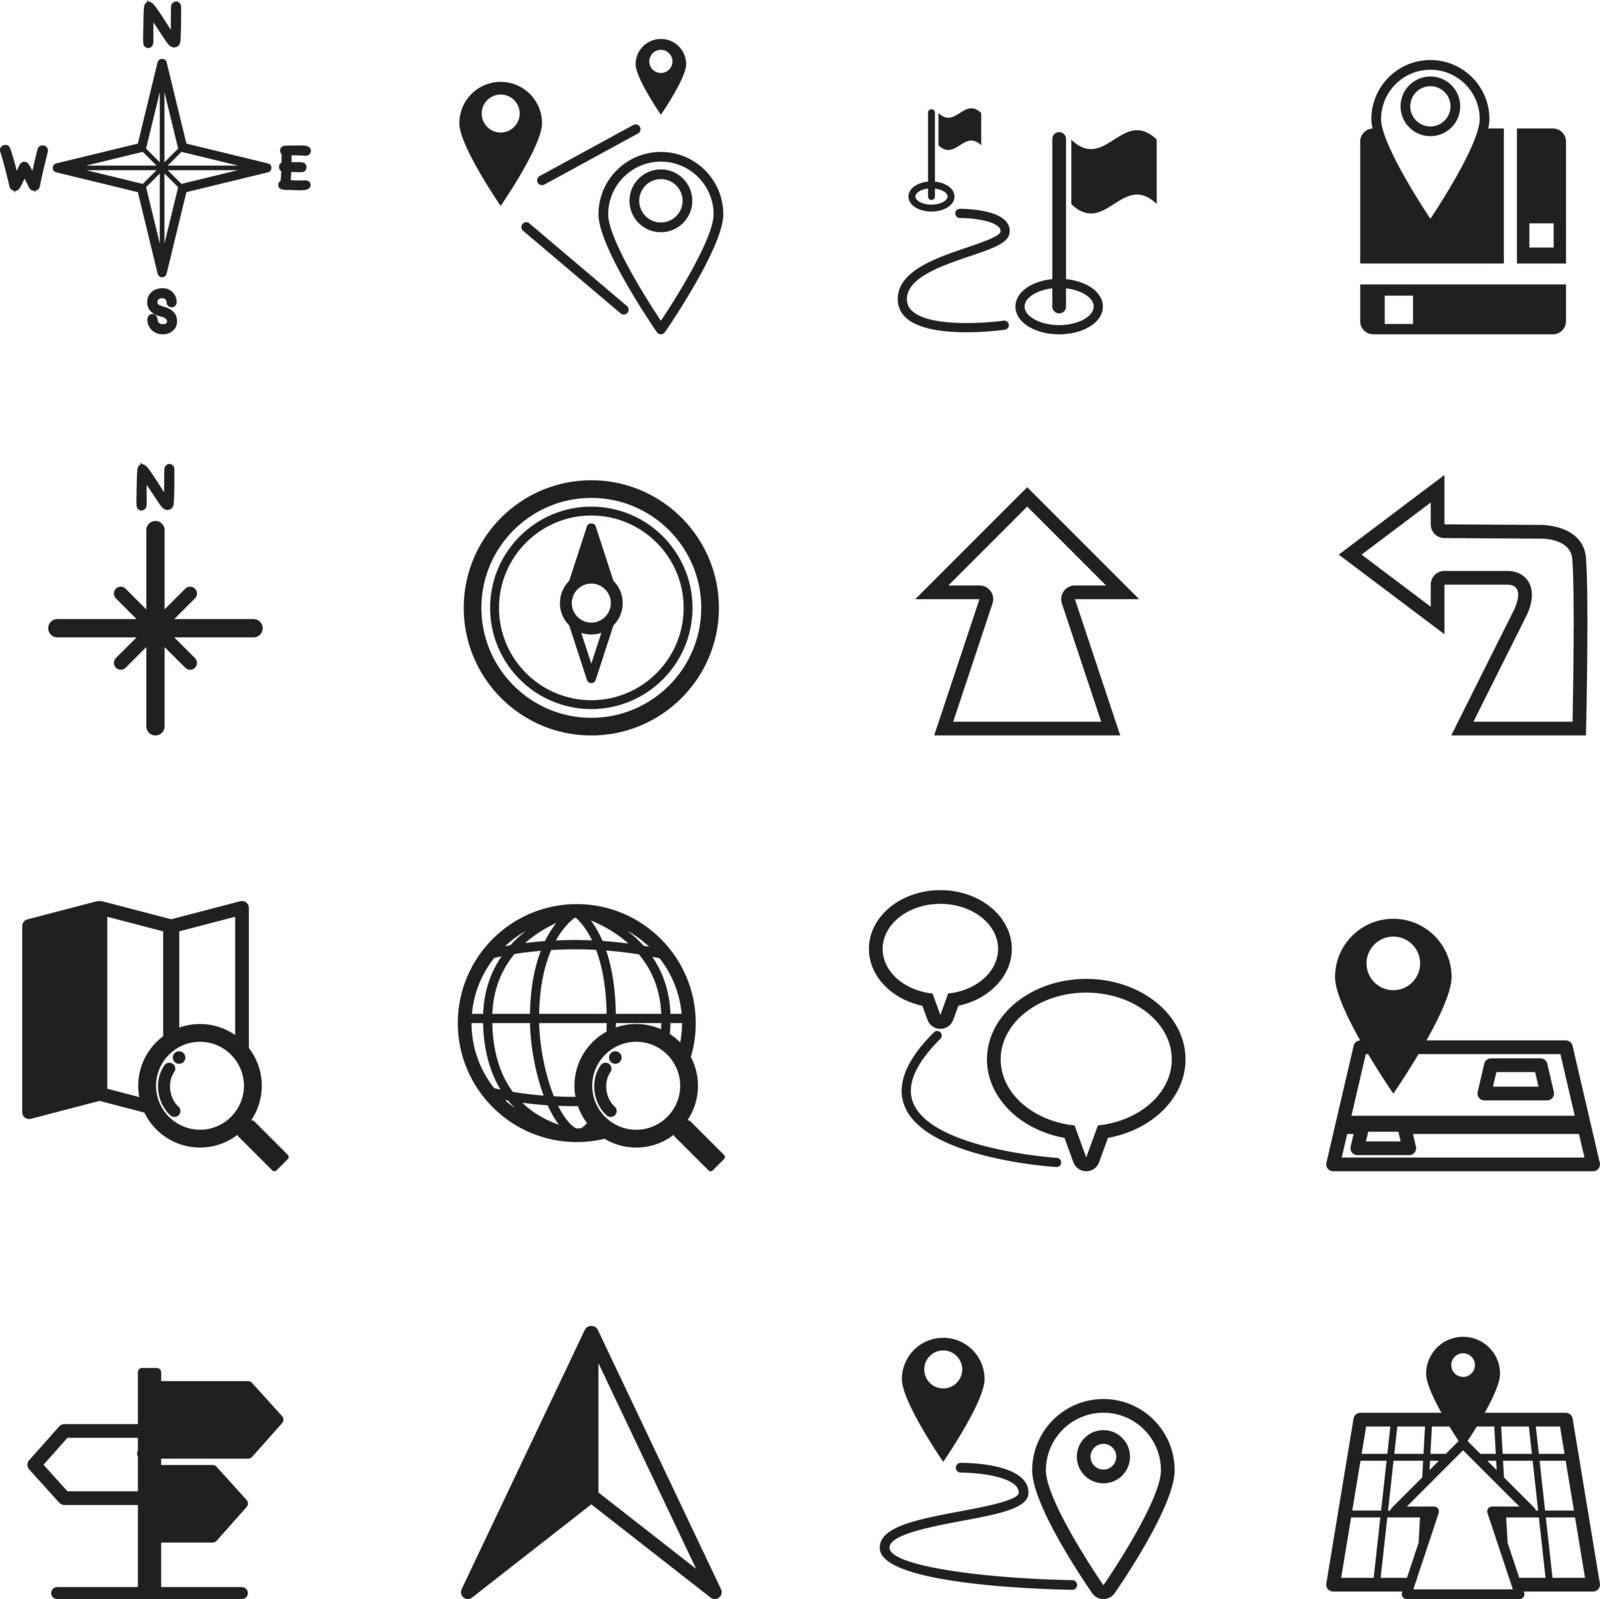 Navigation icons set